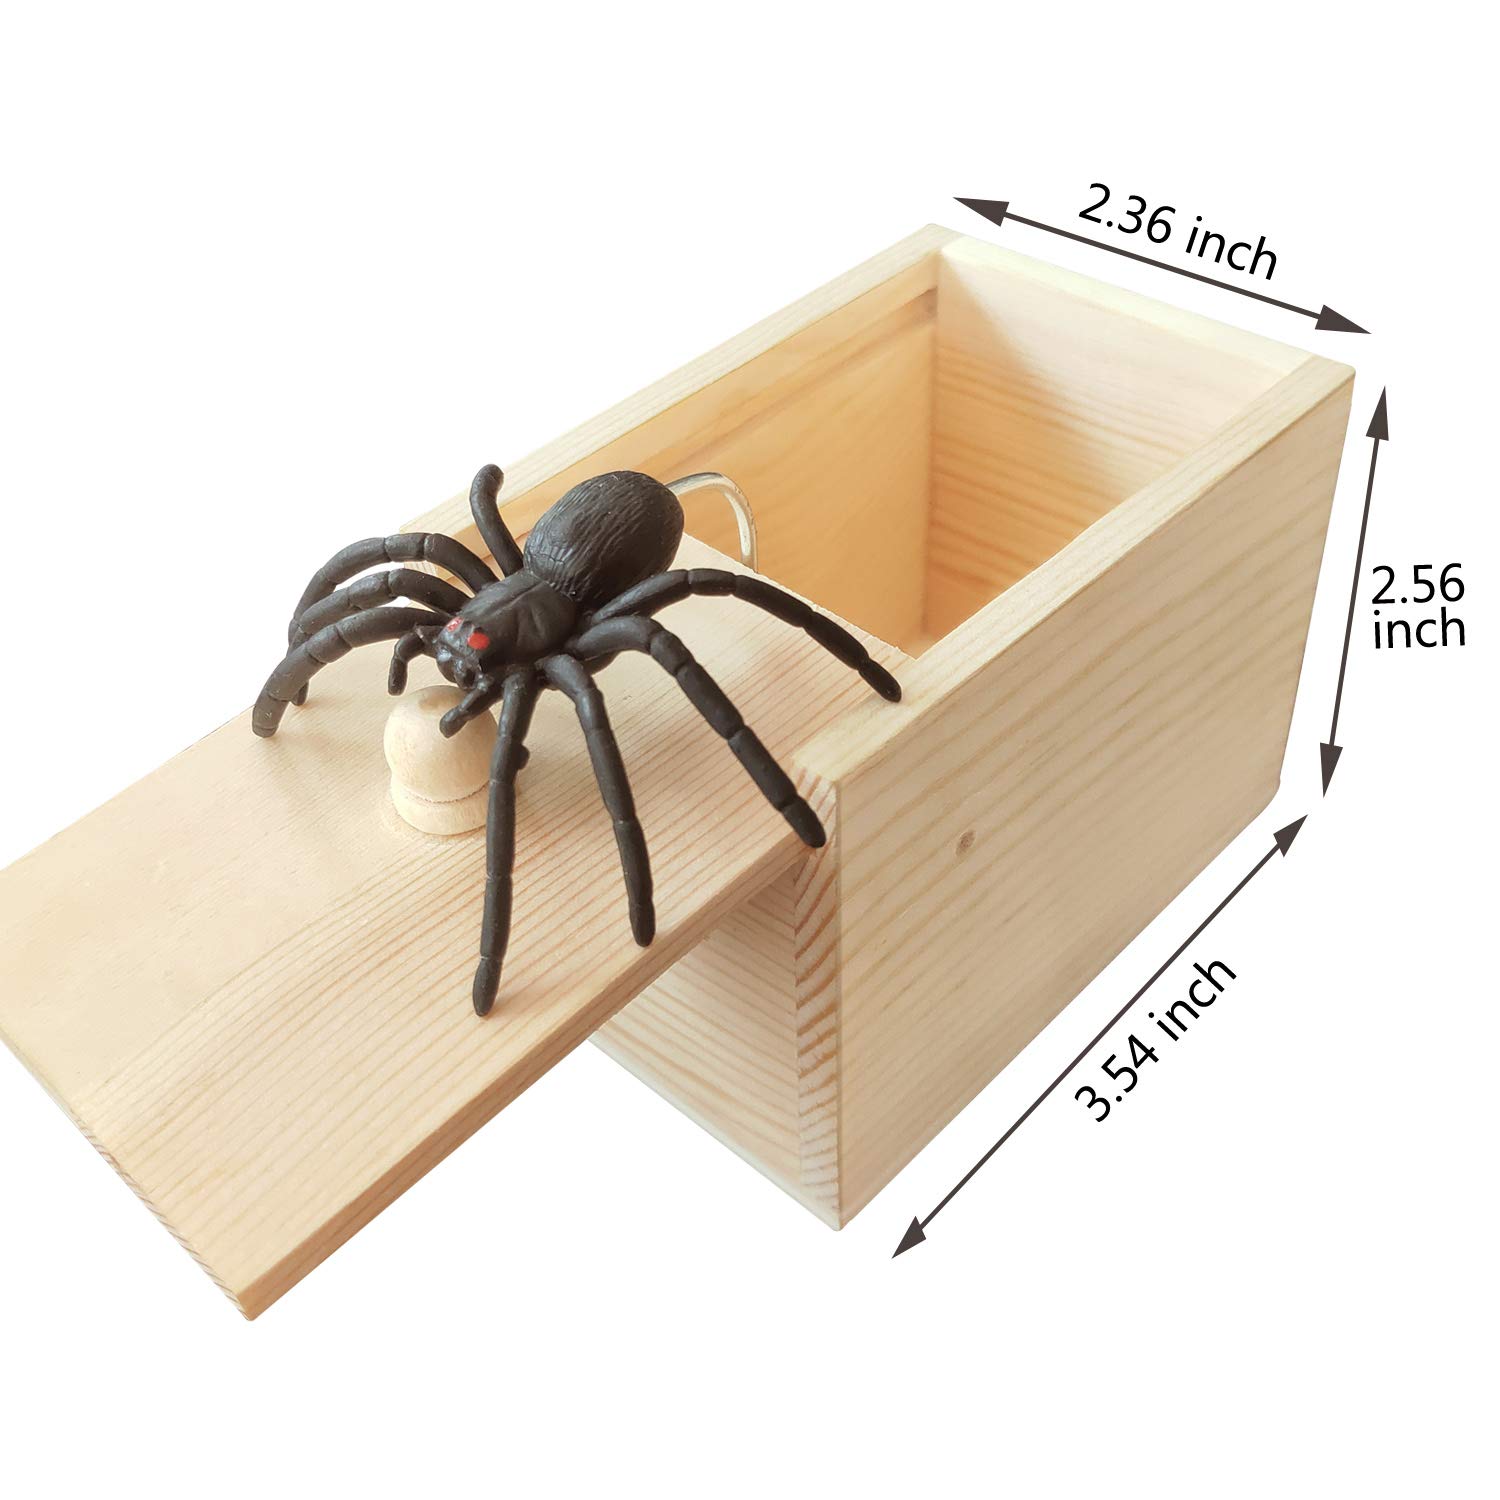 Braintastic Fun Spider Money Surprise Box,Rubber Spider Prank Box,Handcrafted Spider in Box Prank, Multicolor